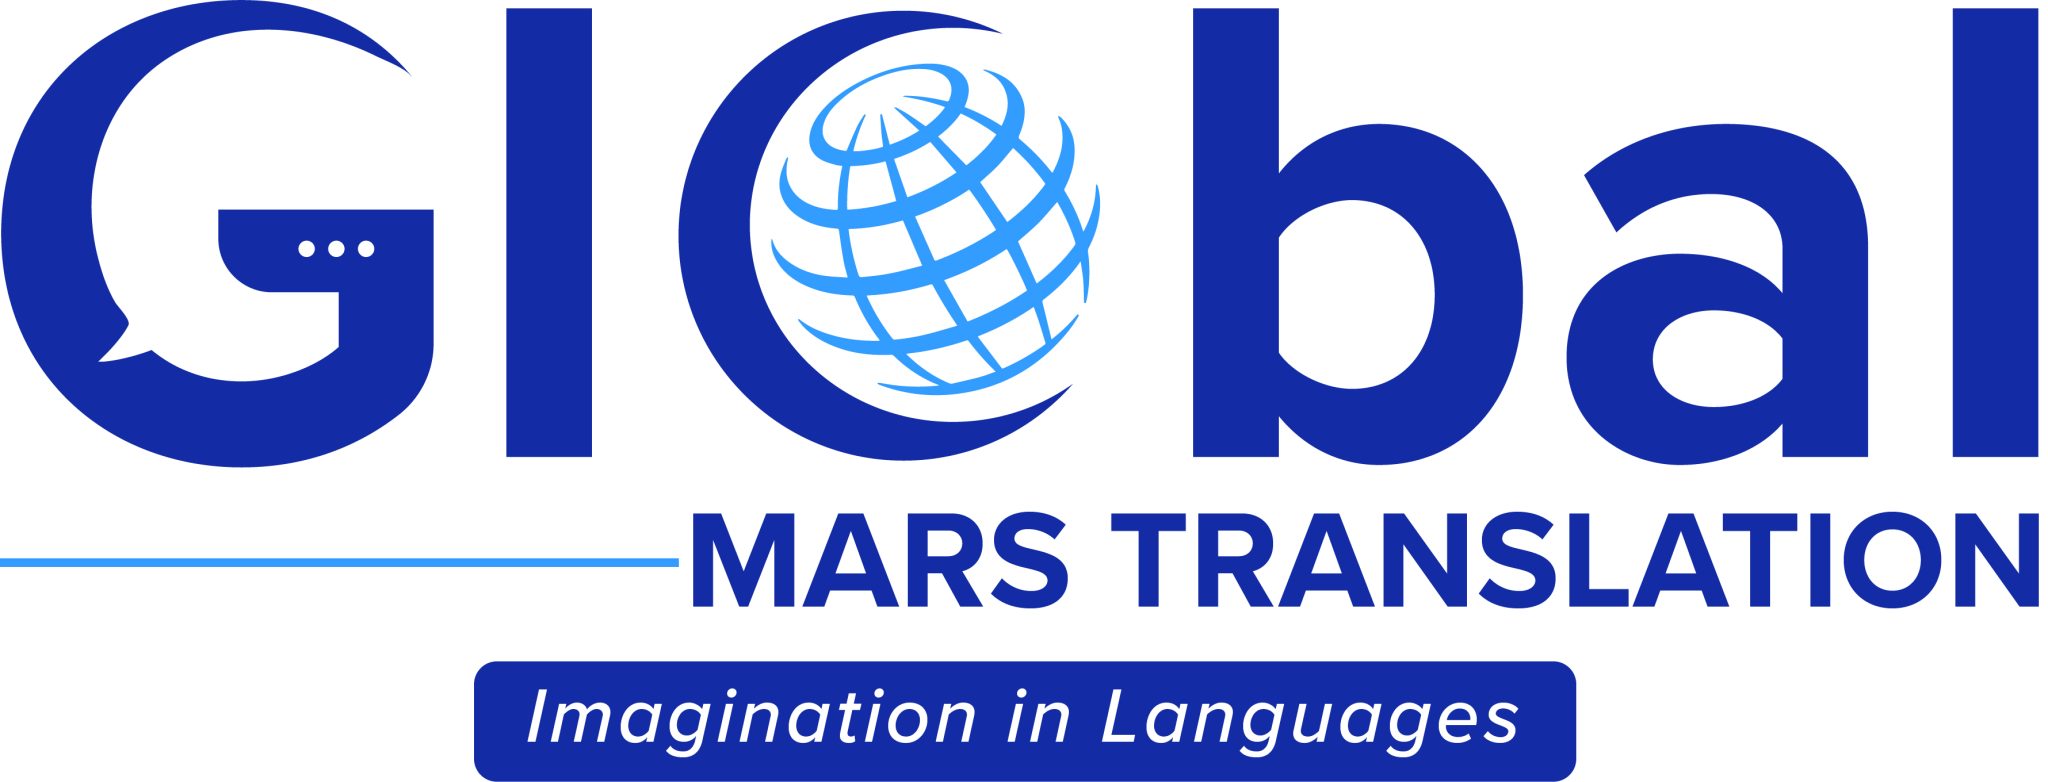 Global Mars Translation